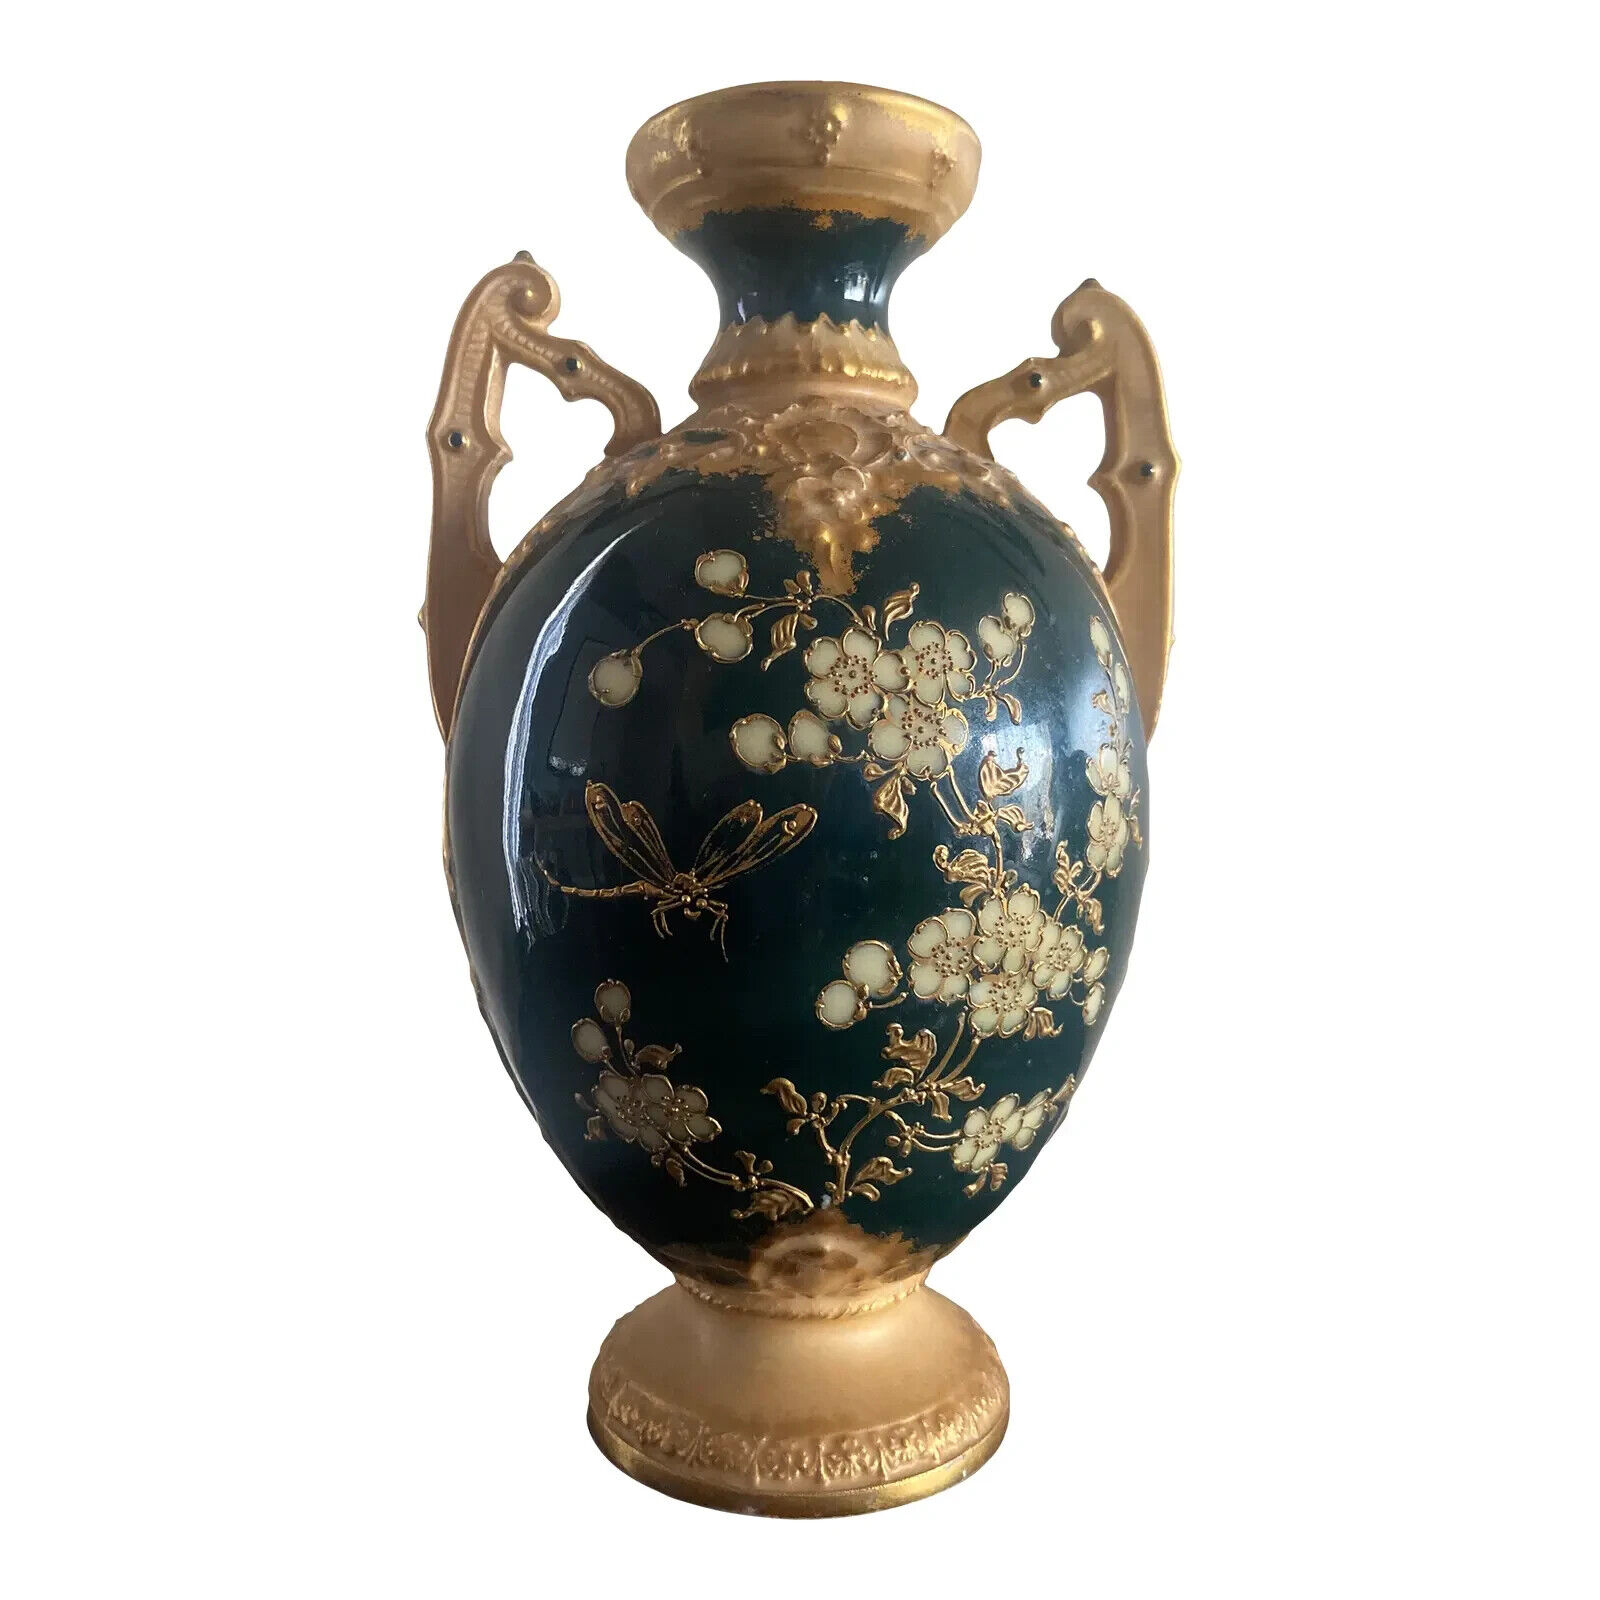 Antique Ew Turn Wein Green and Gold Floral Amphora Vase